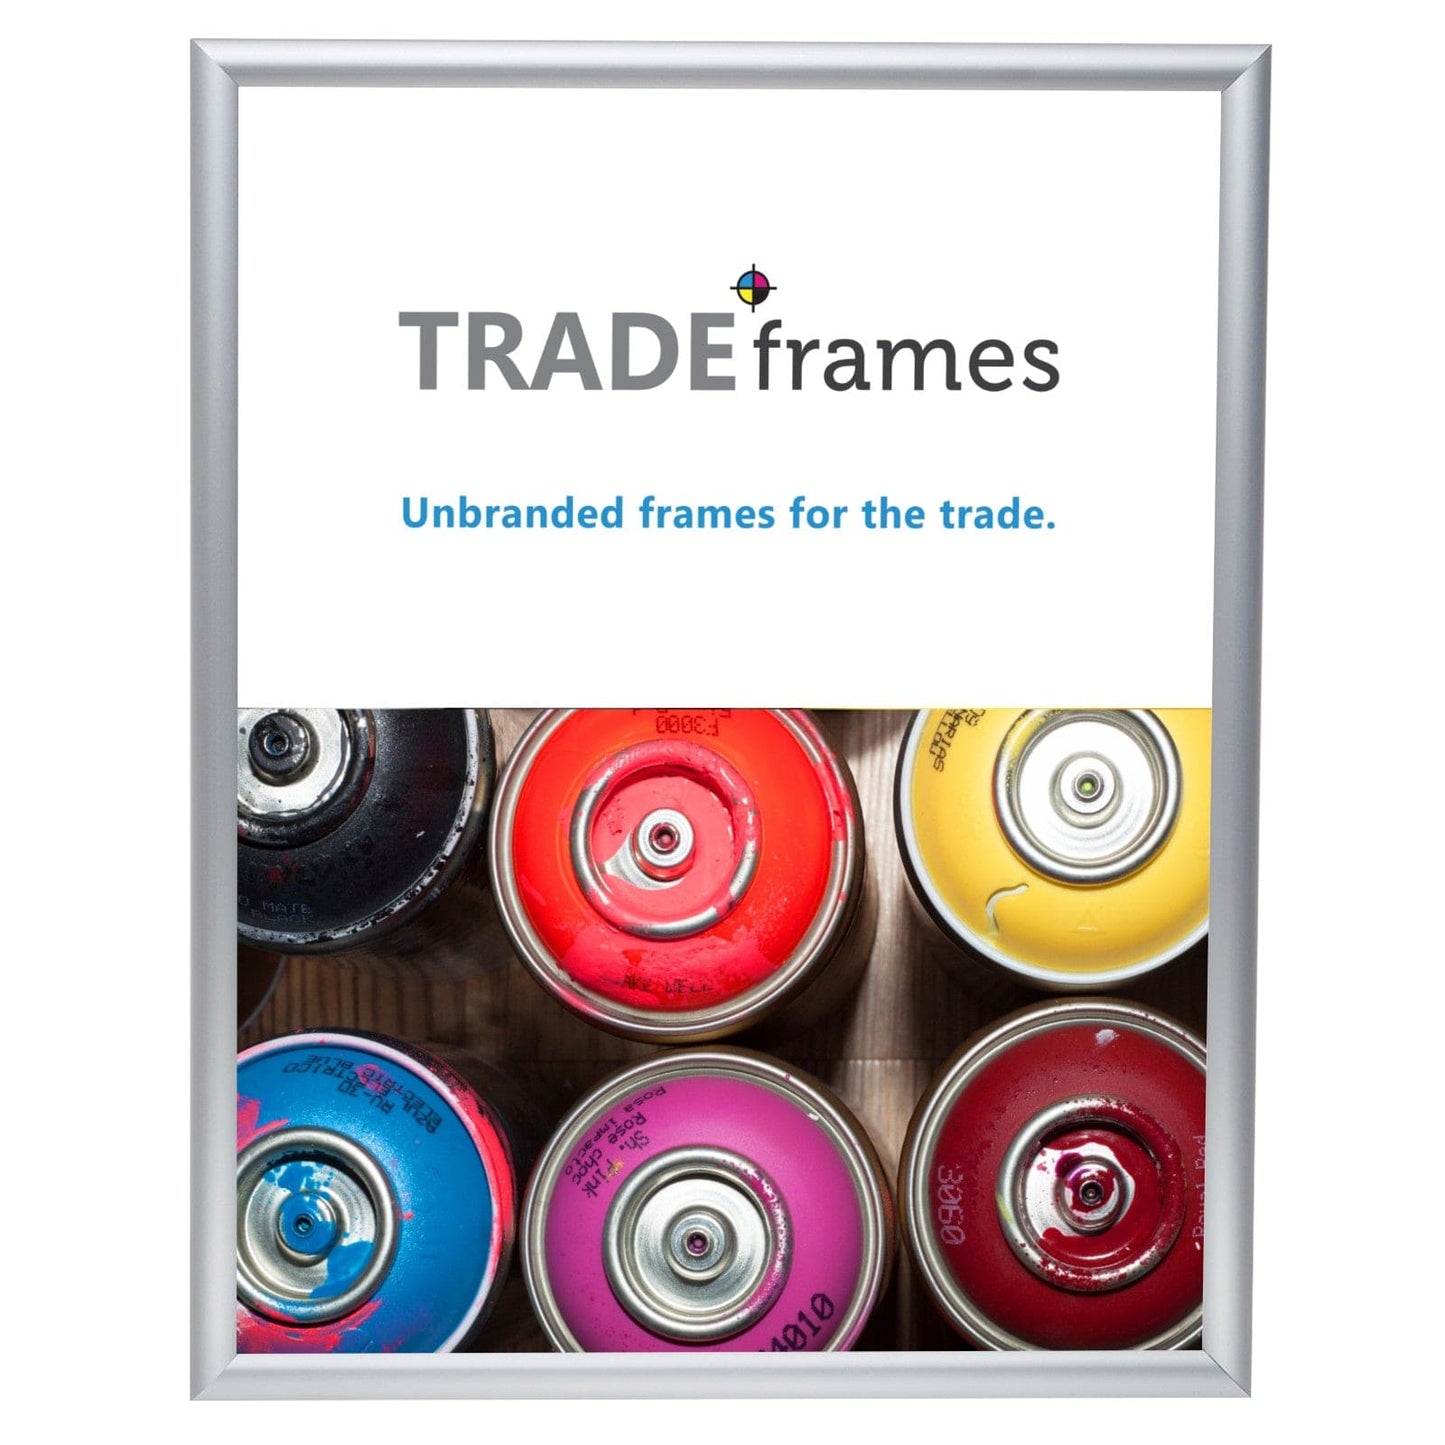 16x20 Silver TRADEframe Snap Frame - 1" Profile - Snap Frames Direct